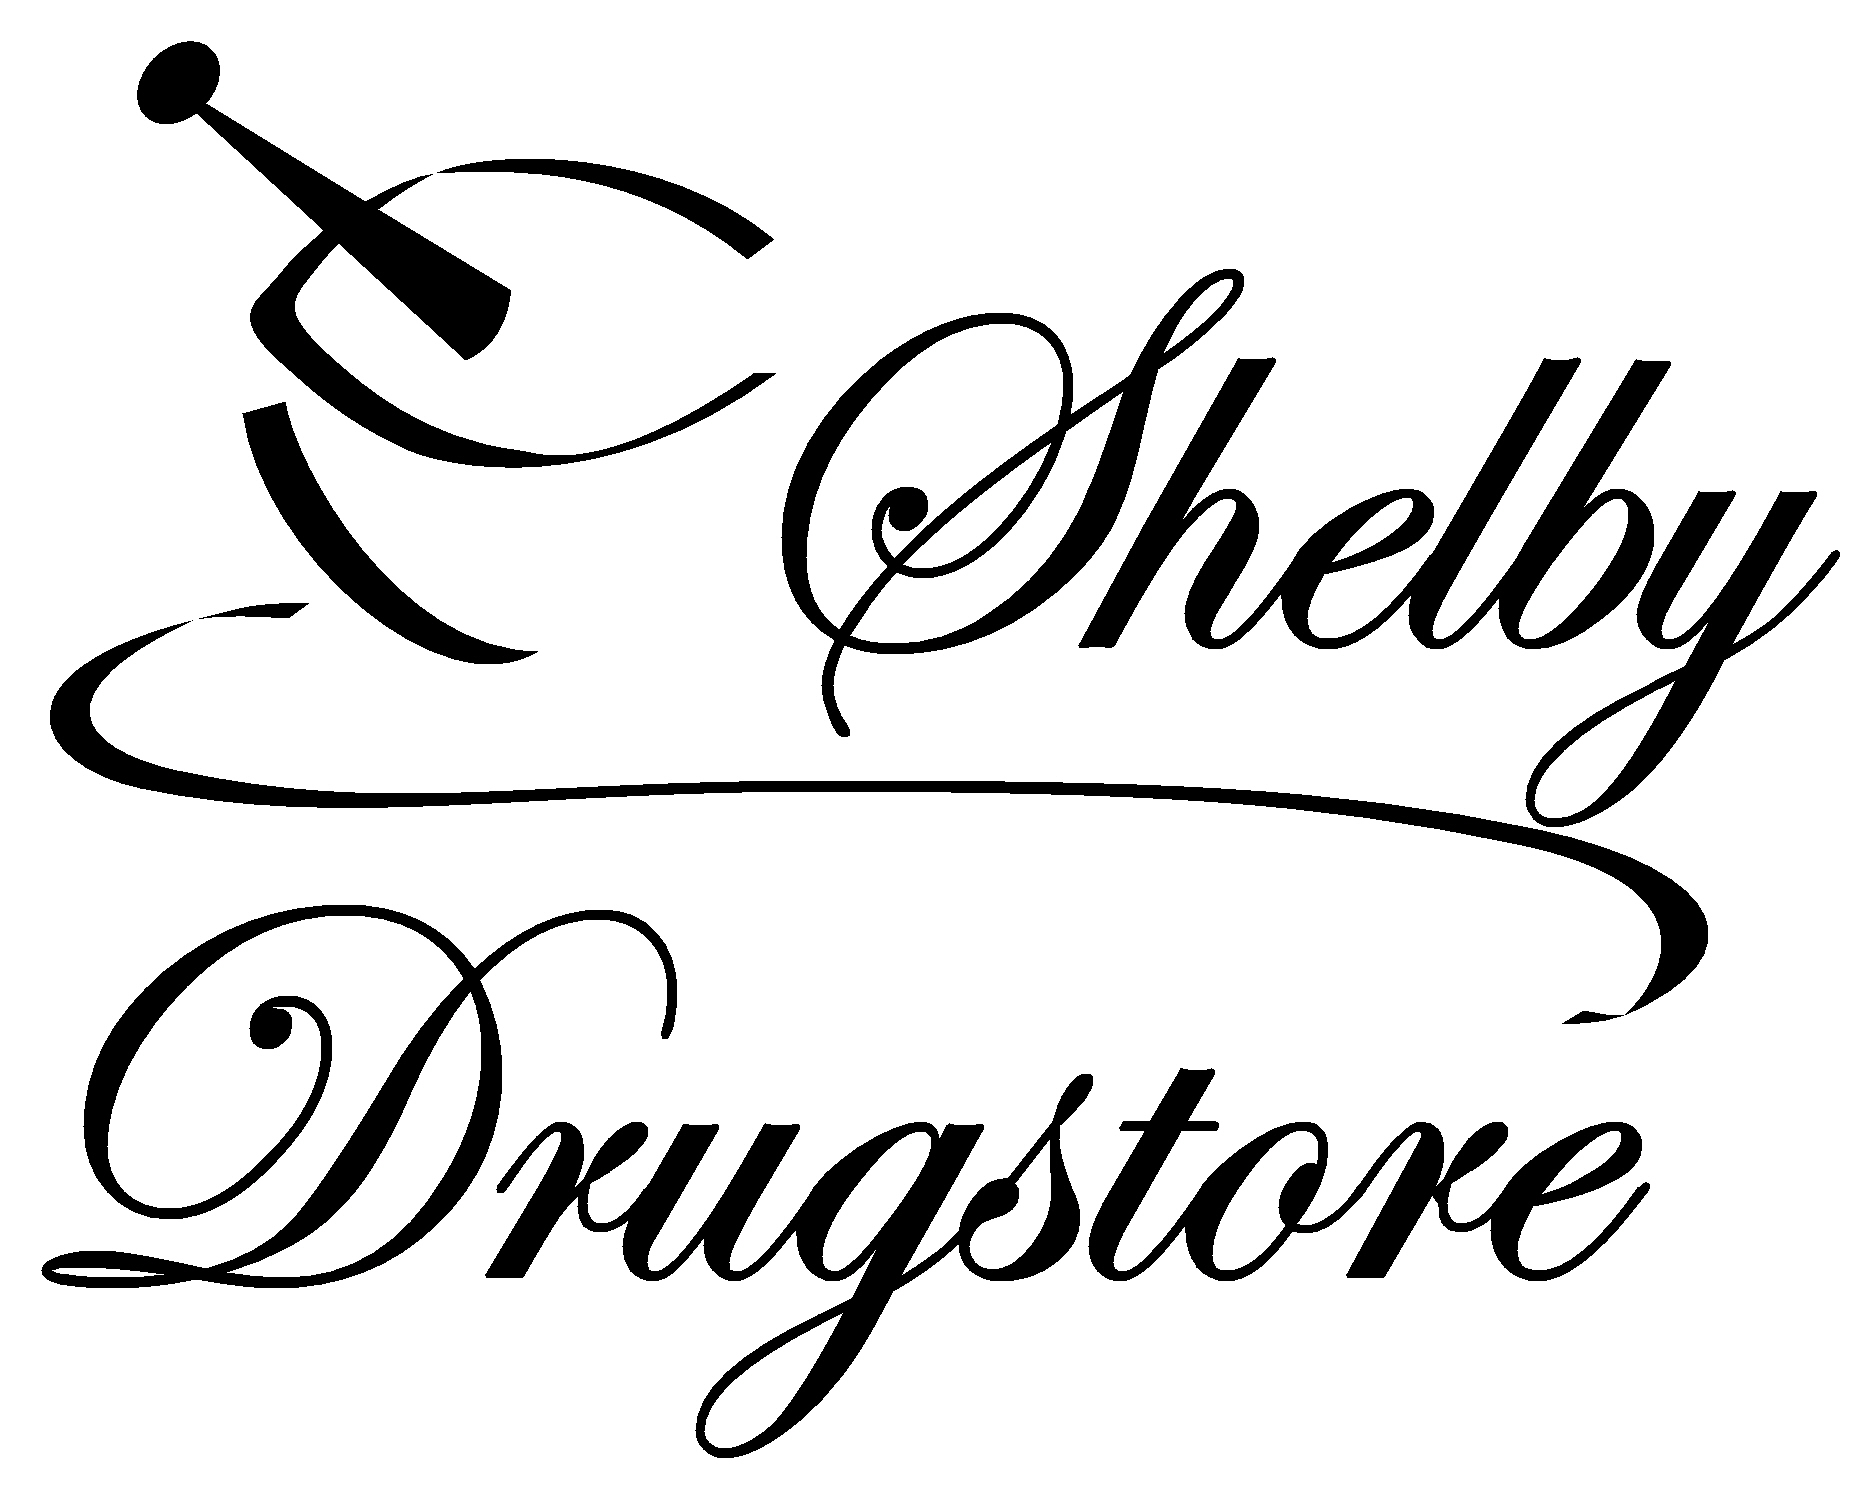 Shelby Drug